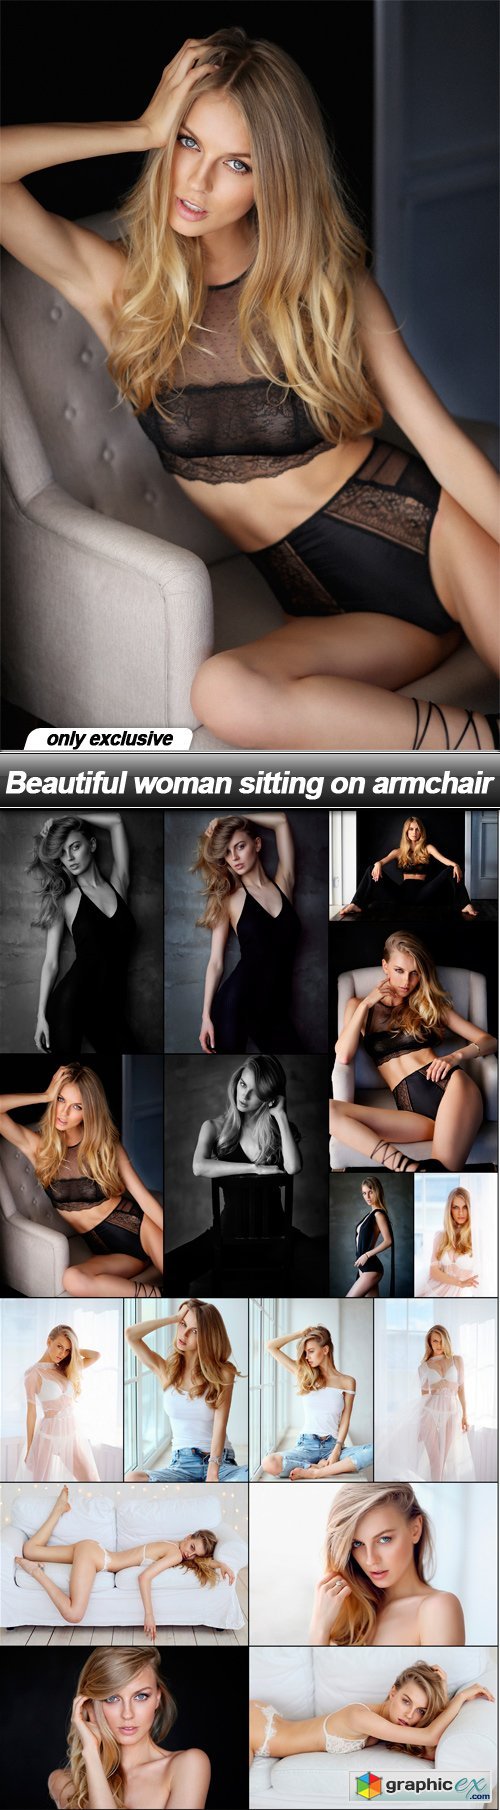 Beautiful woman sitting on armchair - 16 UHQ JPEG